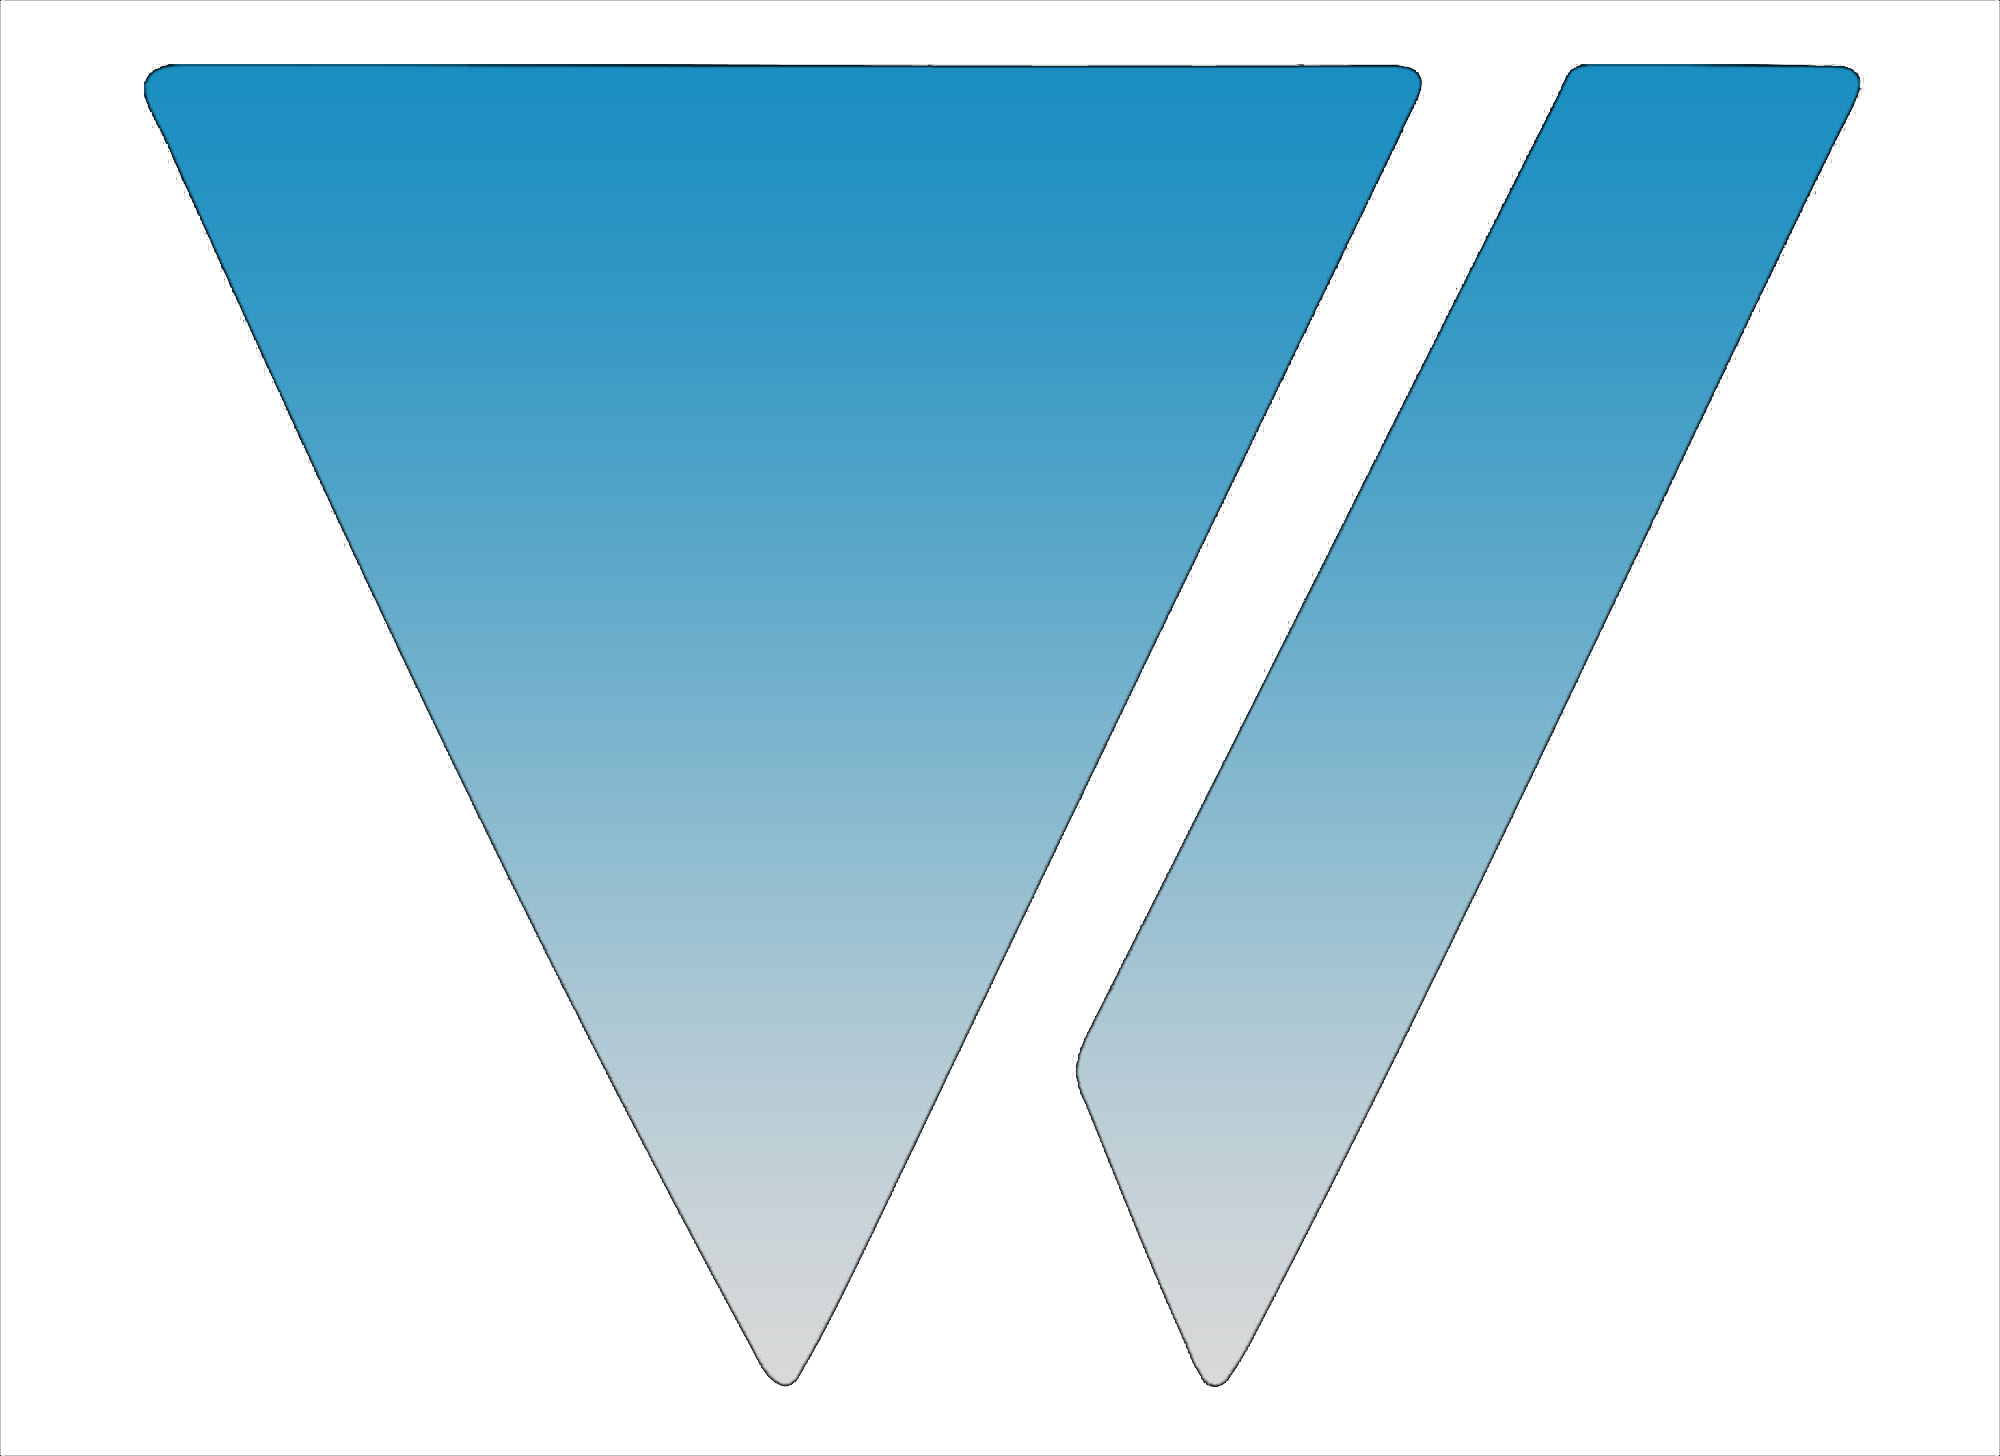 widefield-band-logo